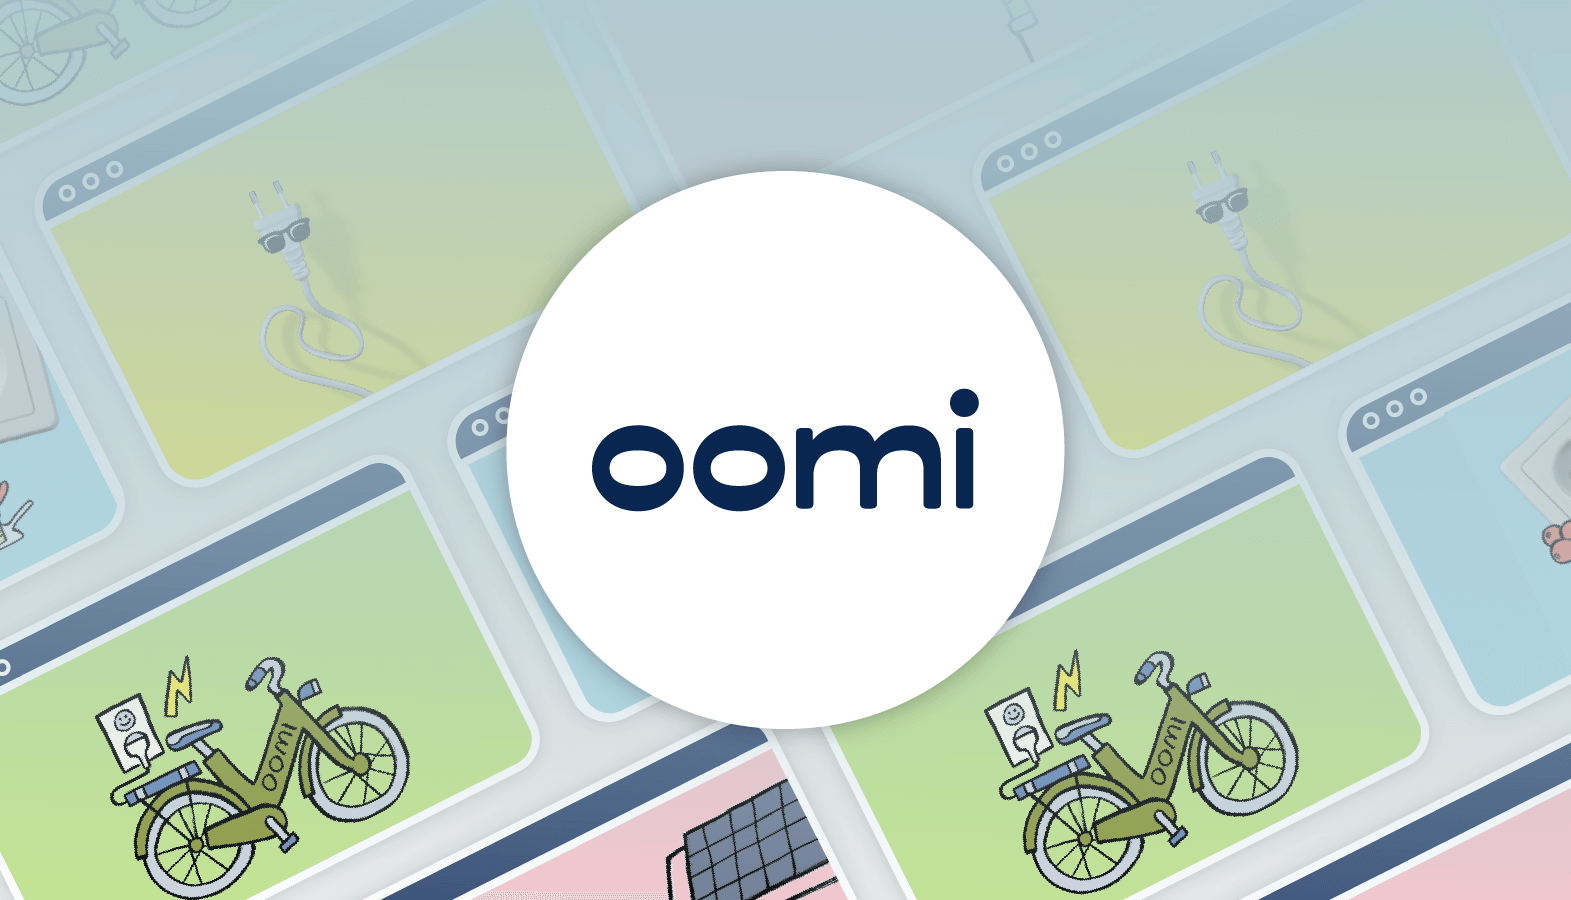 Oomi Customer Story with Playable